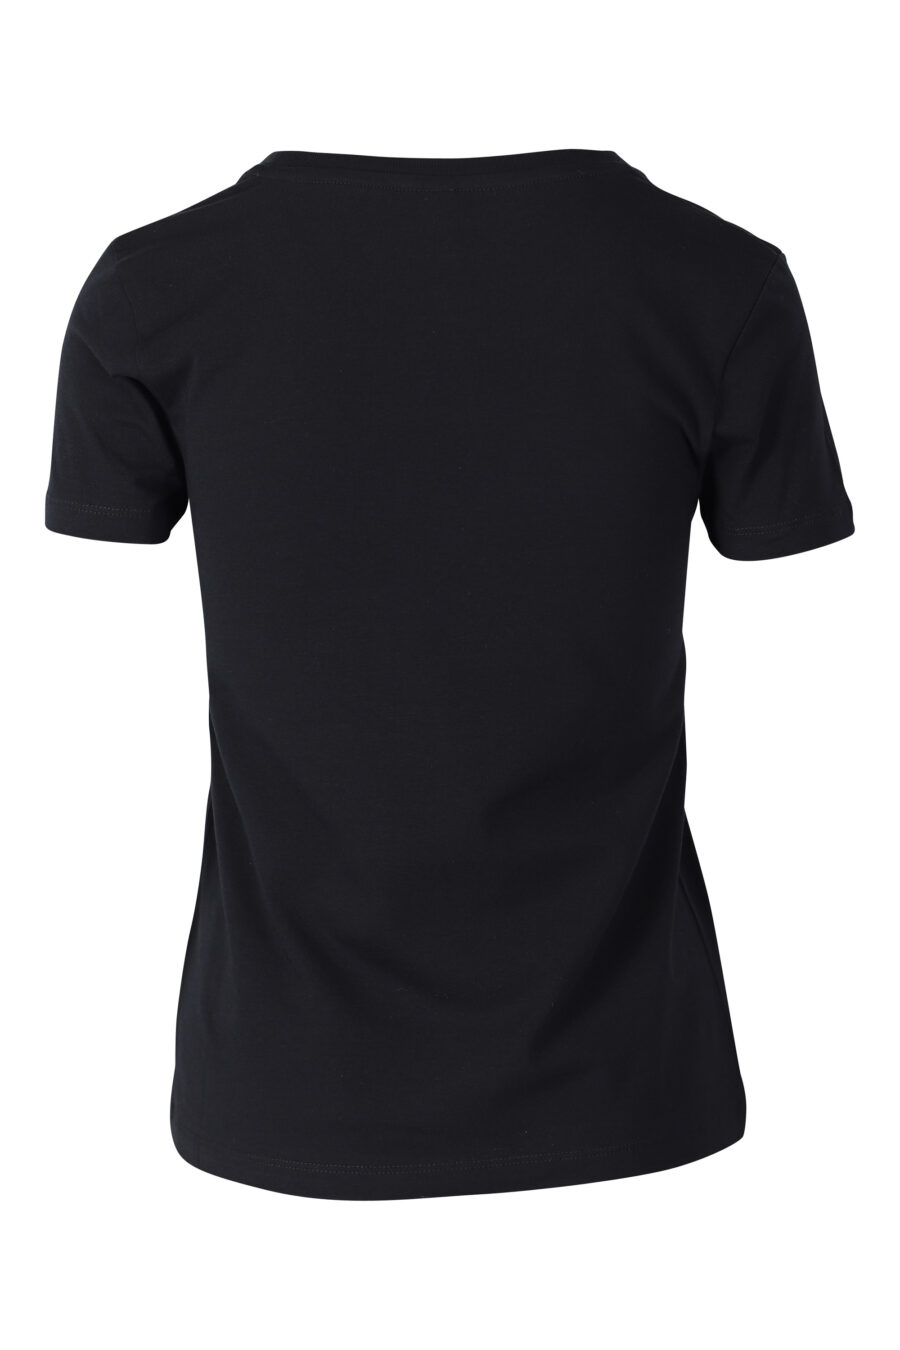 Camiseta negra slim fit con logo oso underbear - IMG 2367